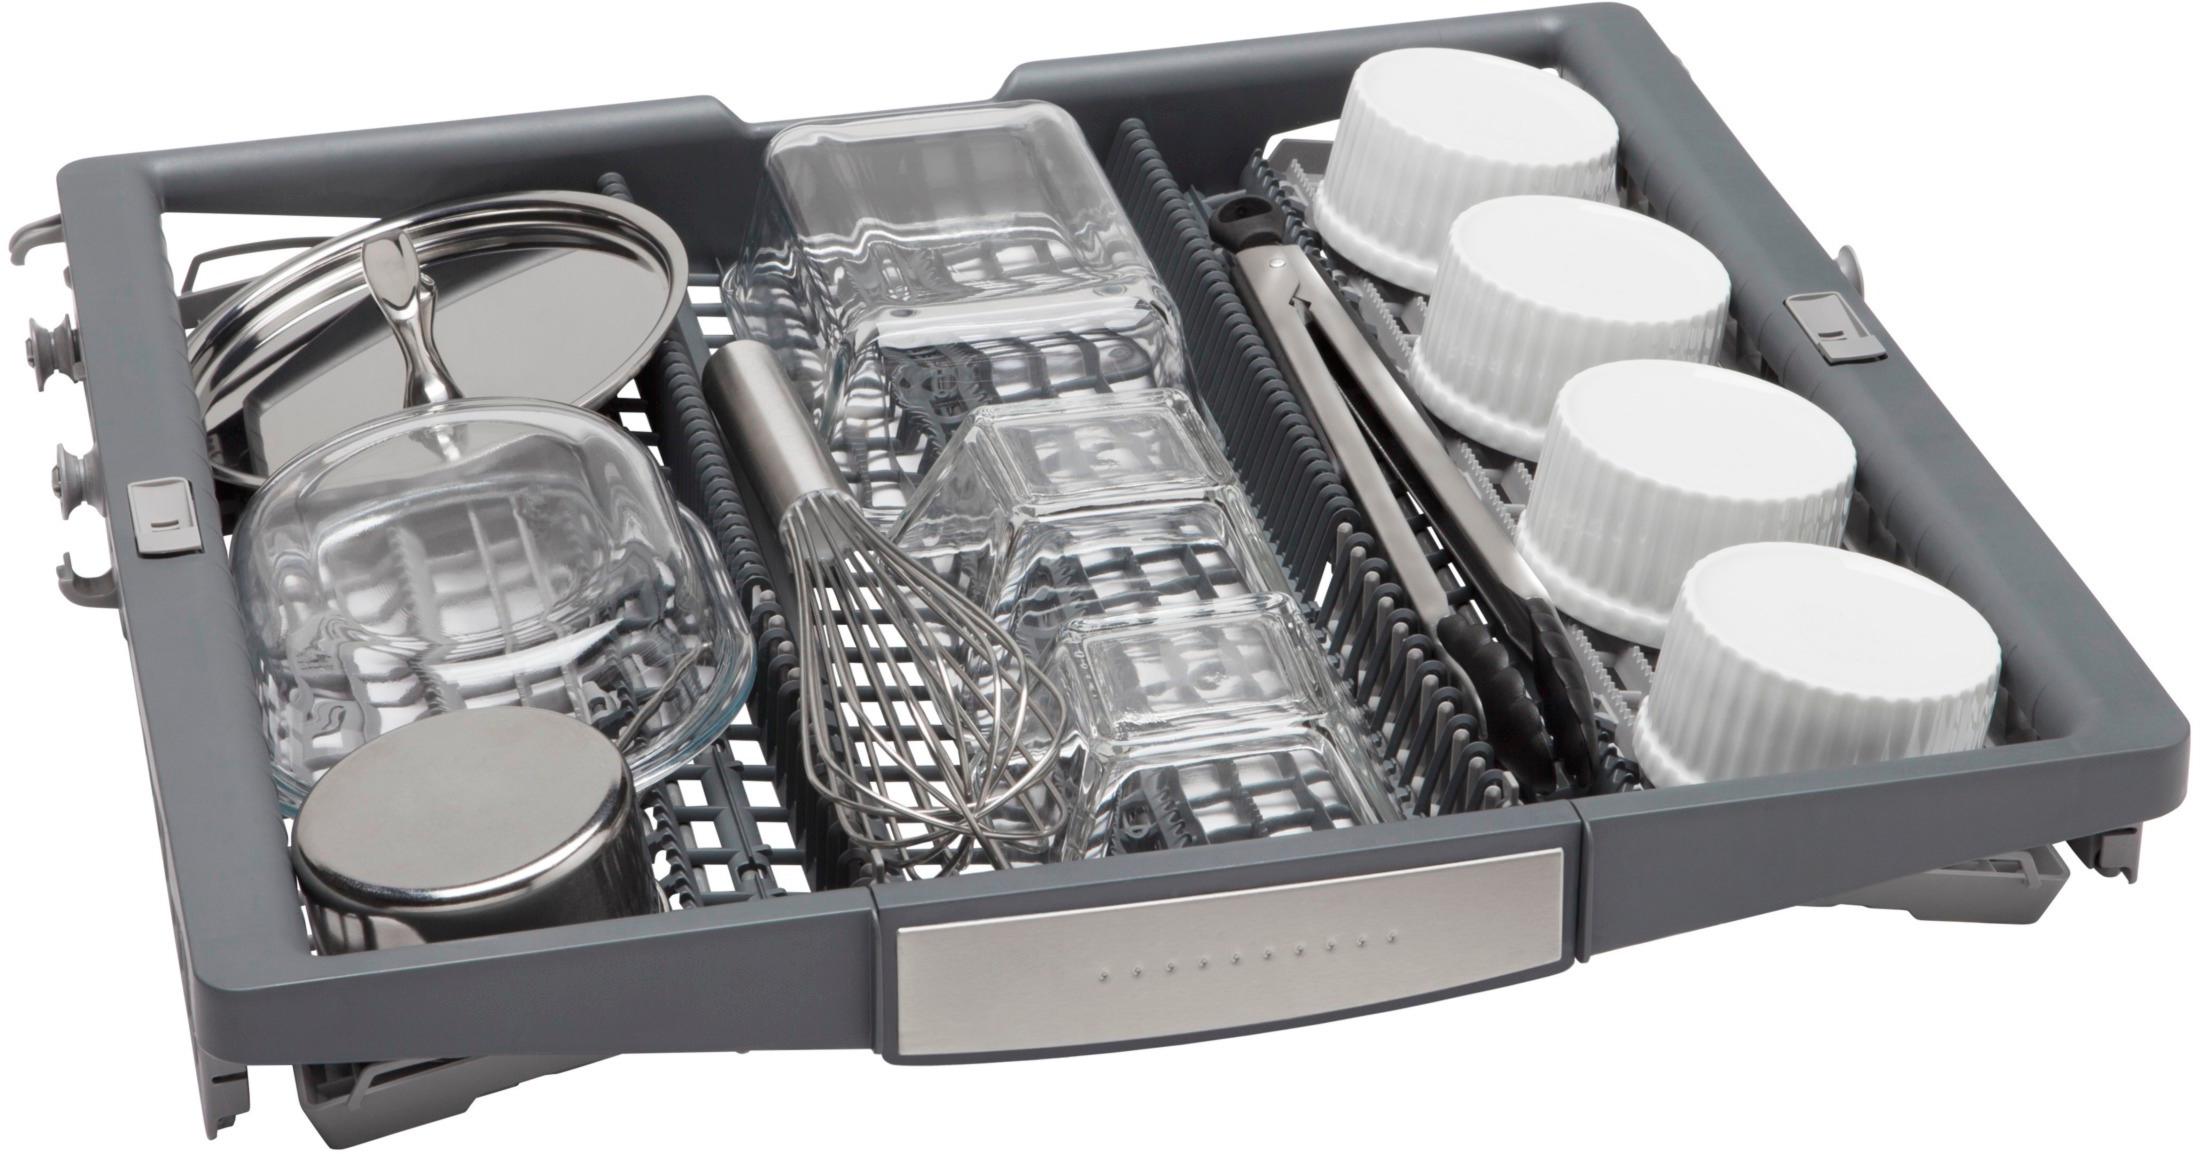 bosch dishwasher 500 series reviews